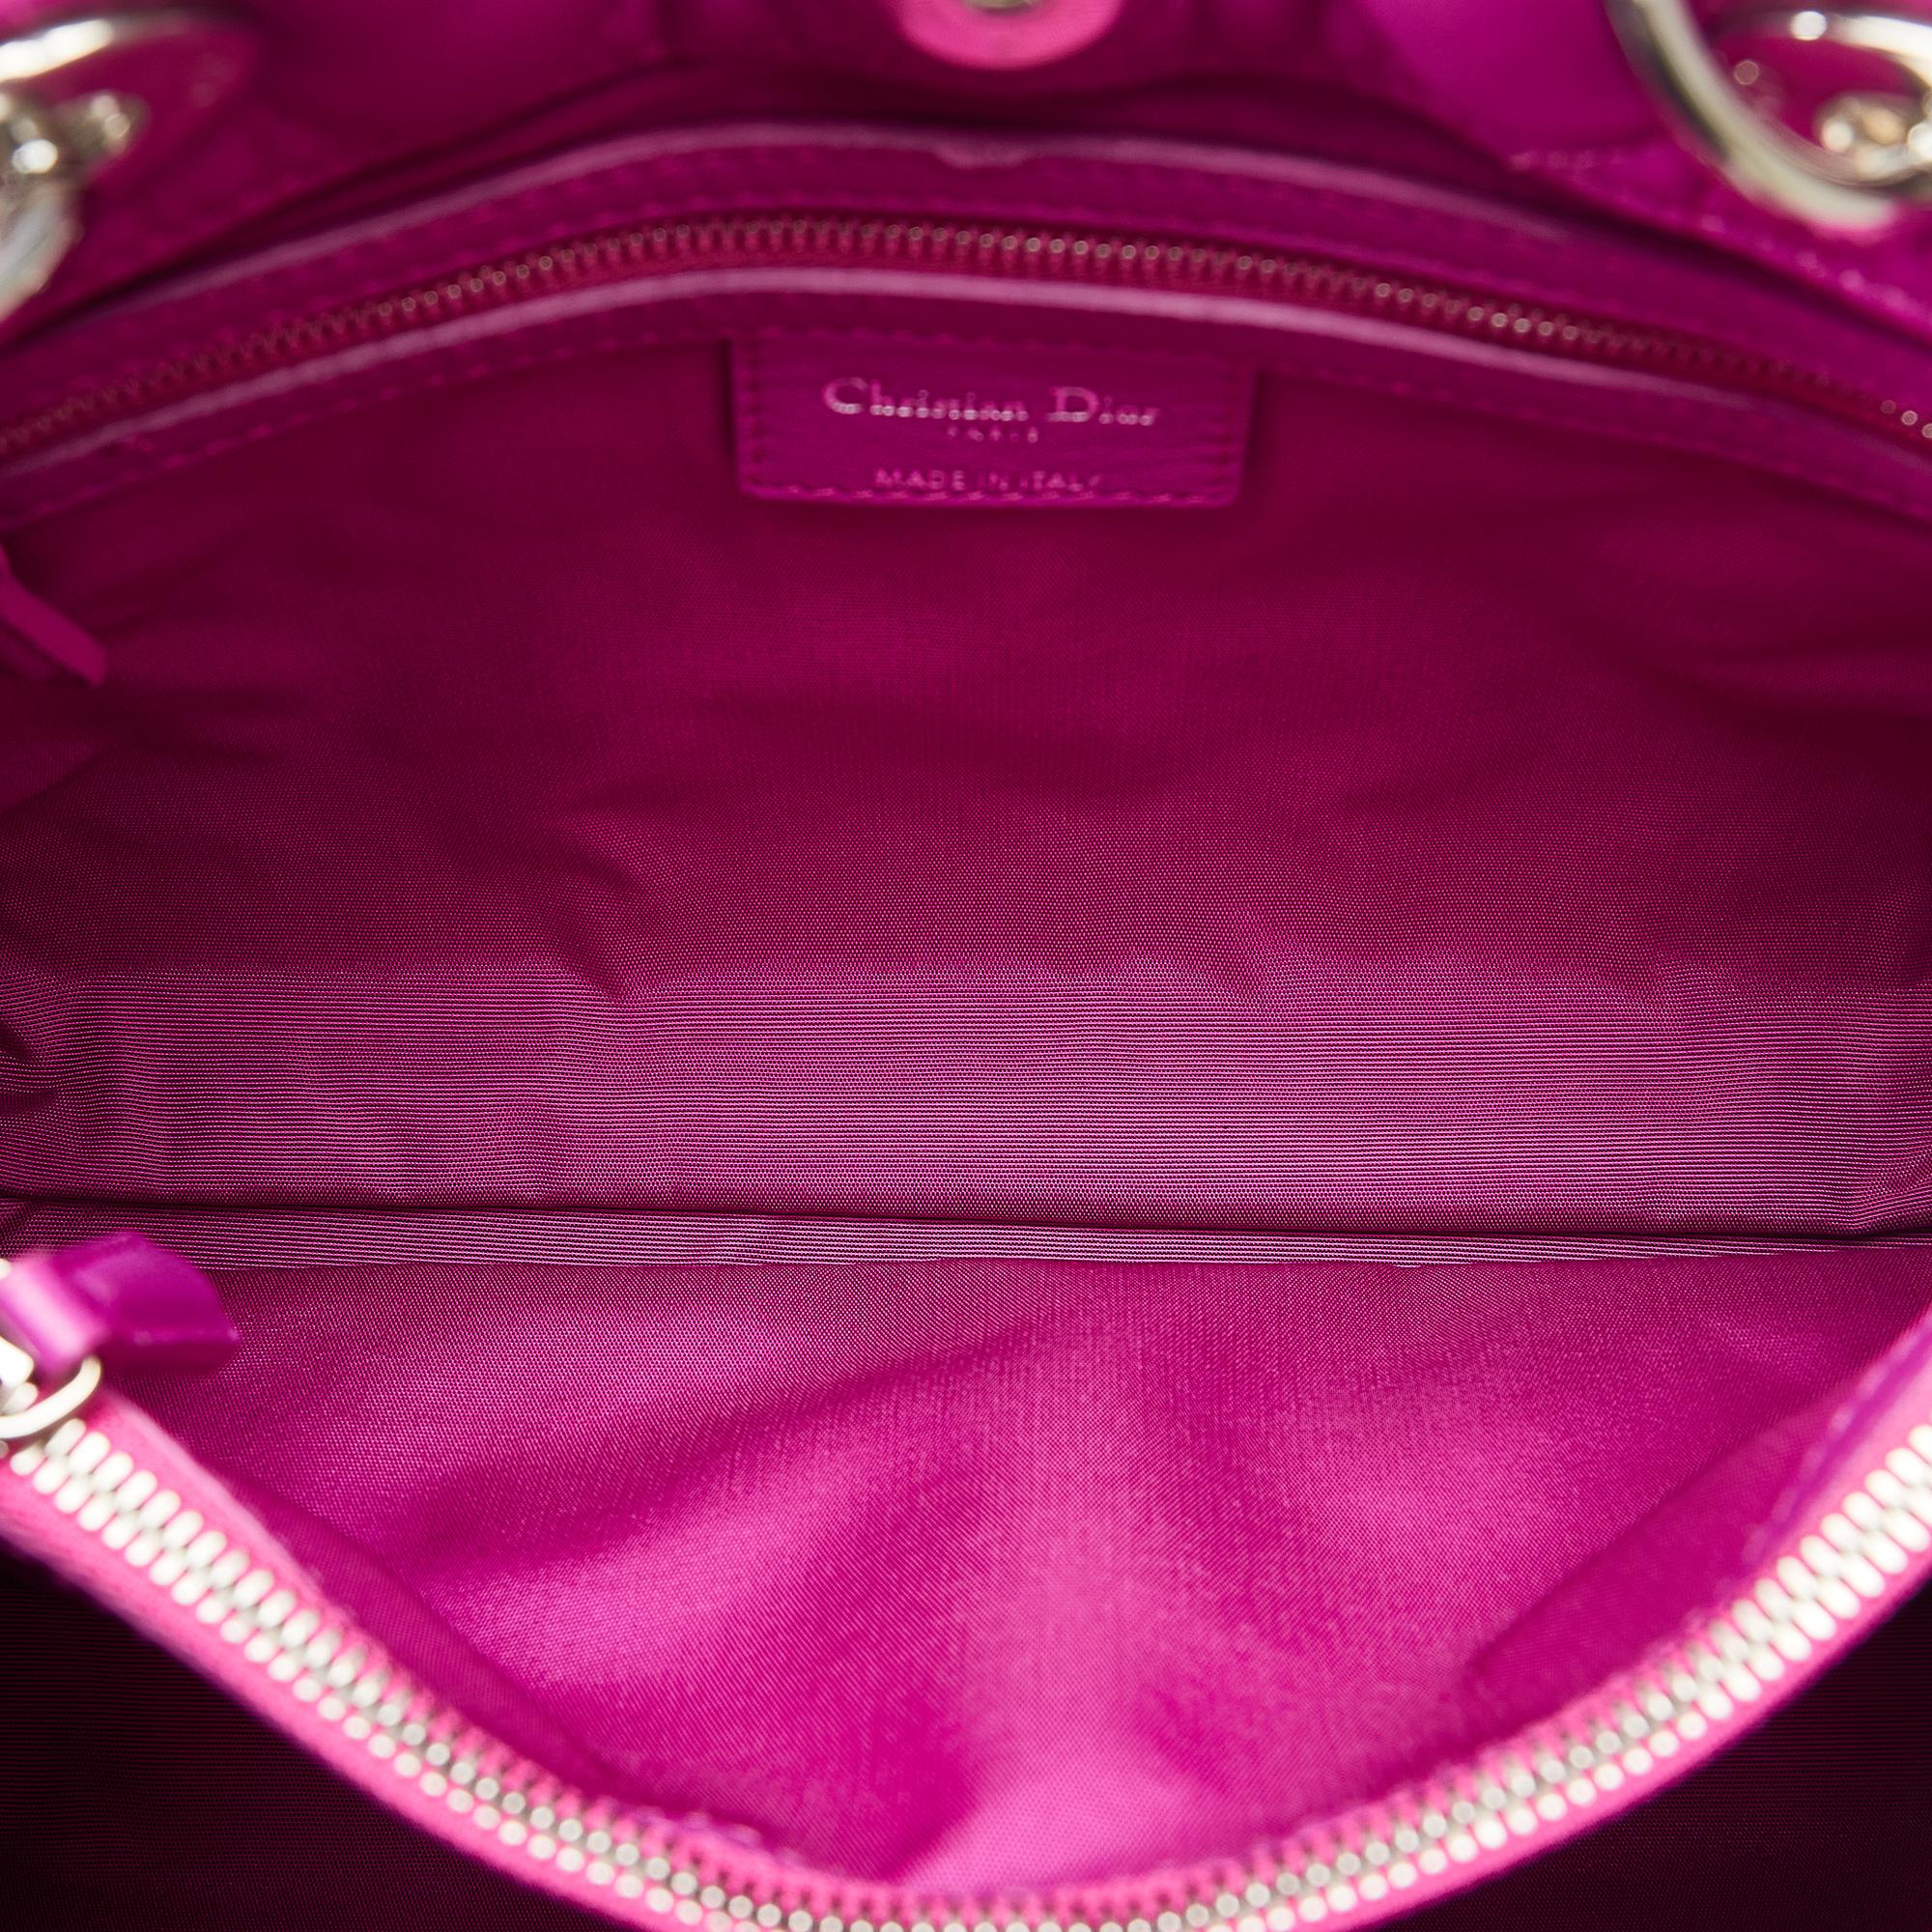 Dior Pink Medium Cannage Lady Dior Soft Shopping Tote